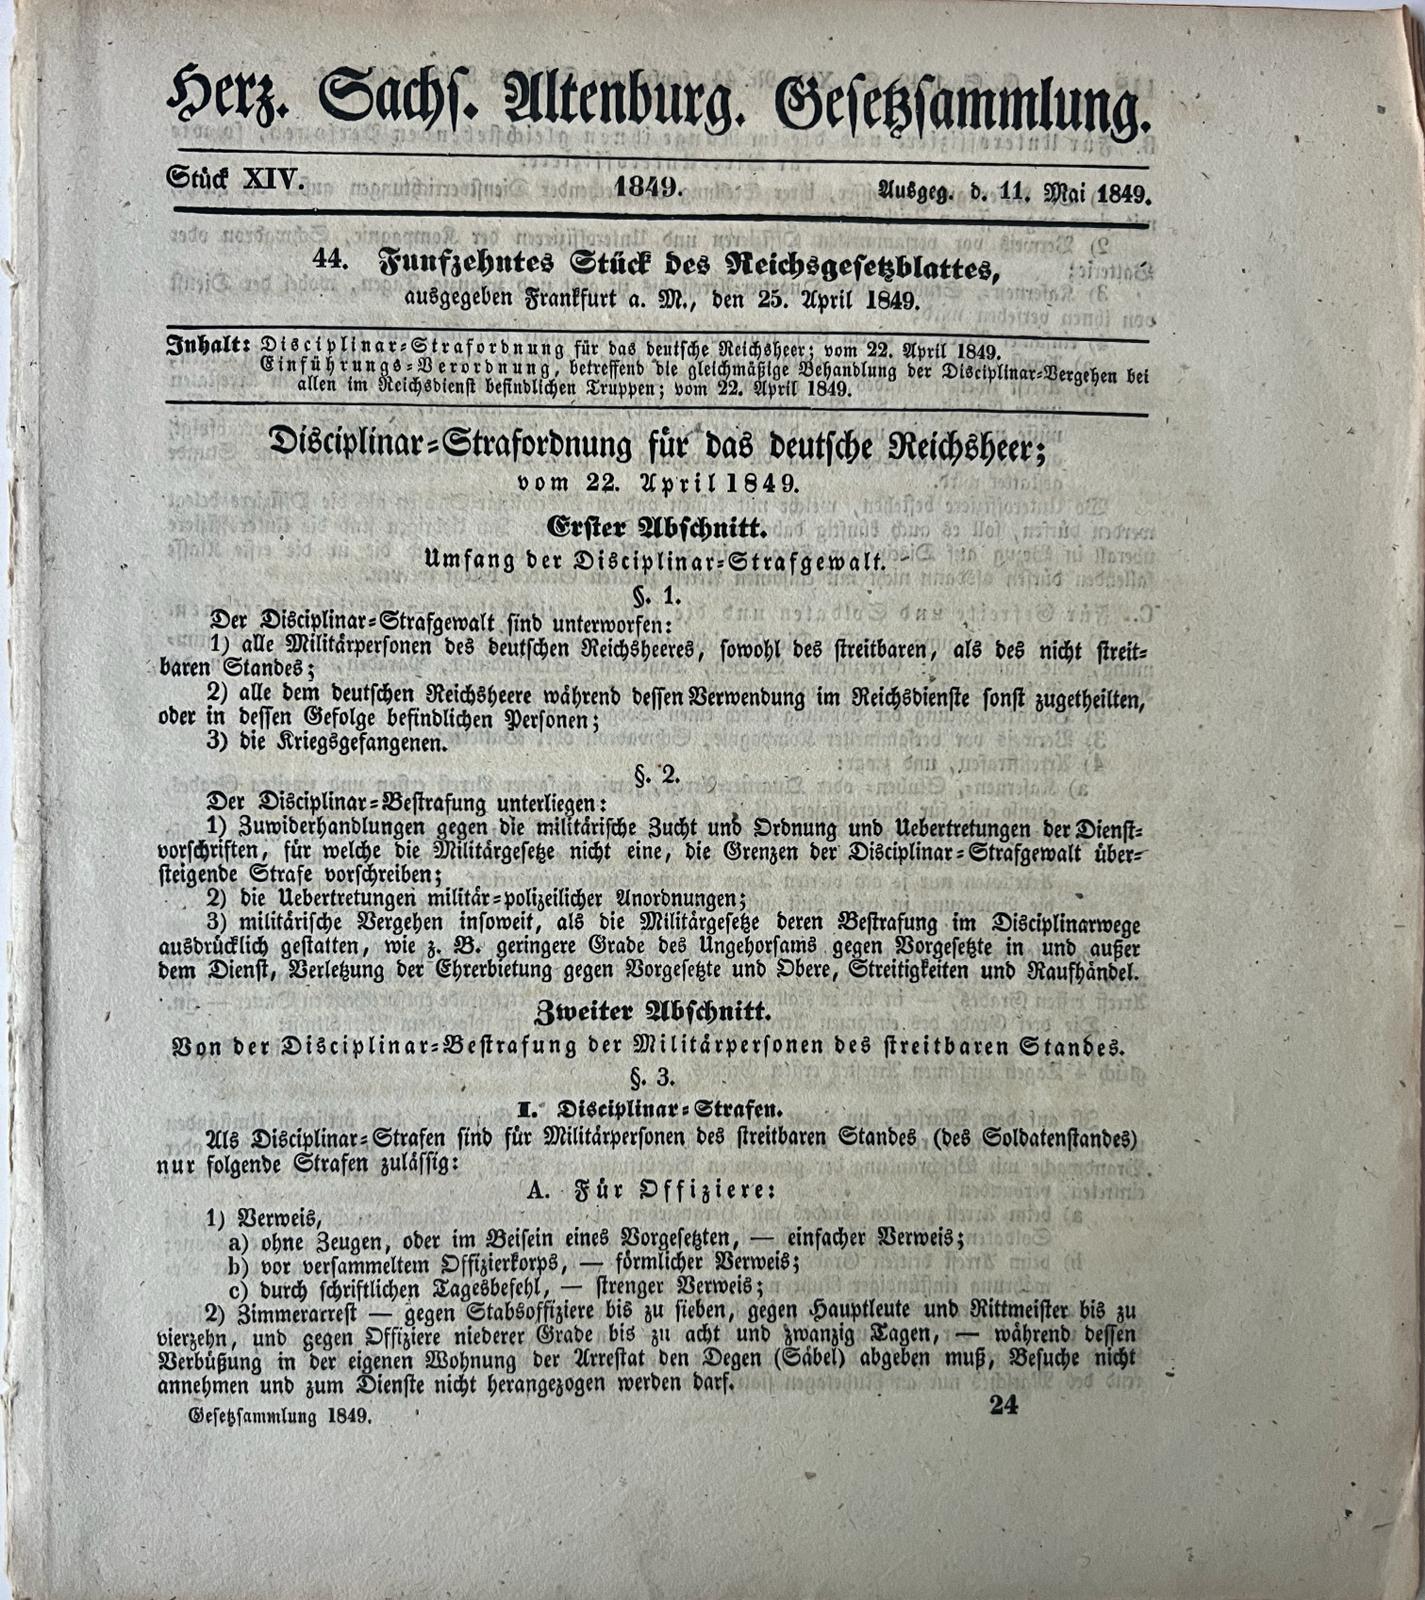  - Printed publication legal 1849 | Publication Herz. Sachsen Altenburg Gesetzsammlung 11 mai 1849, 8 pp. (p. 117-124).